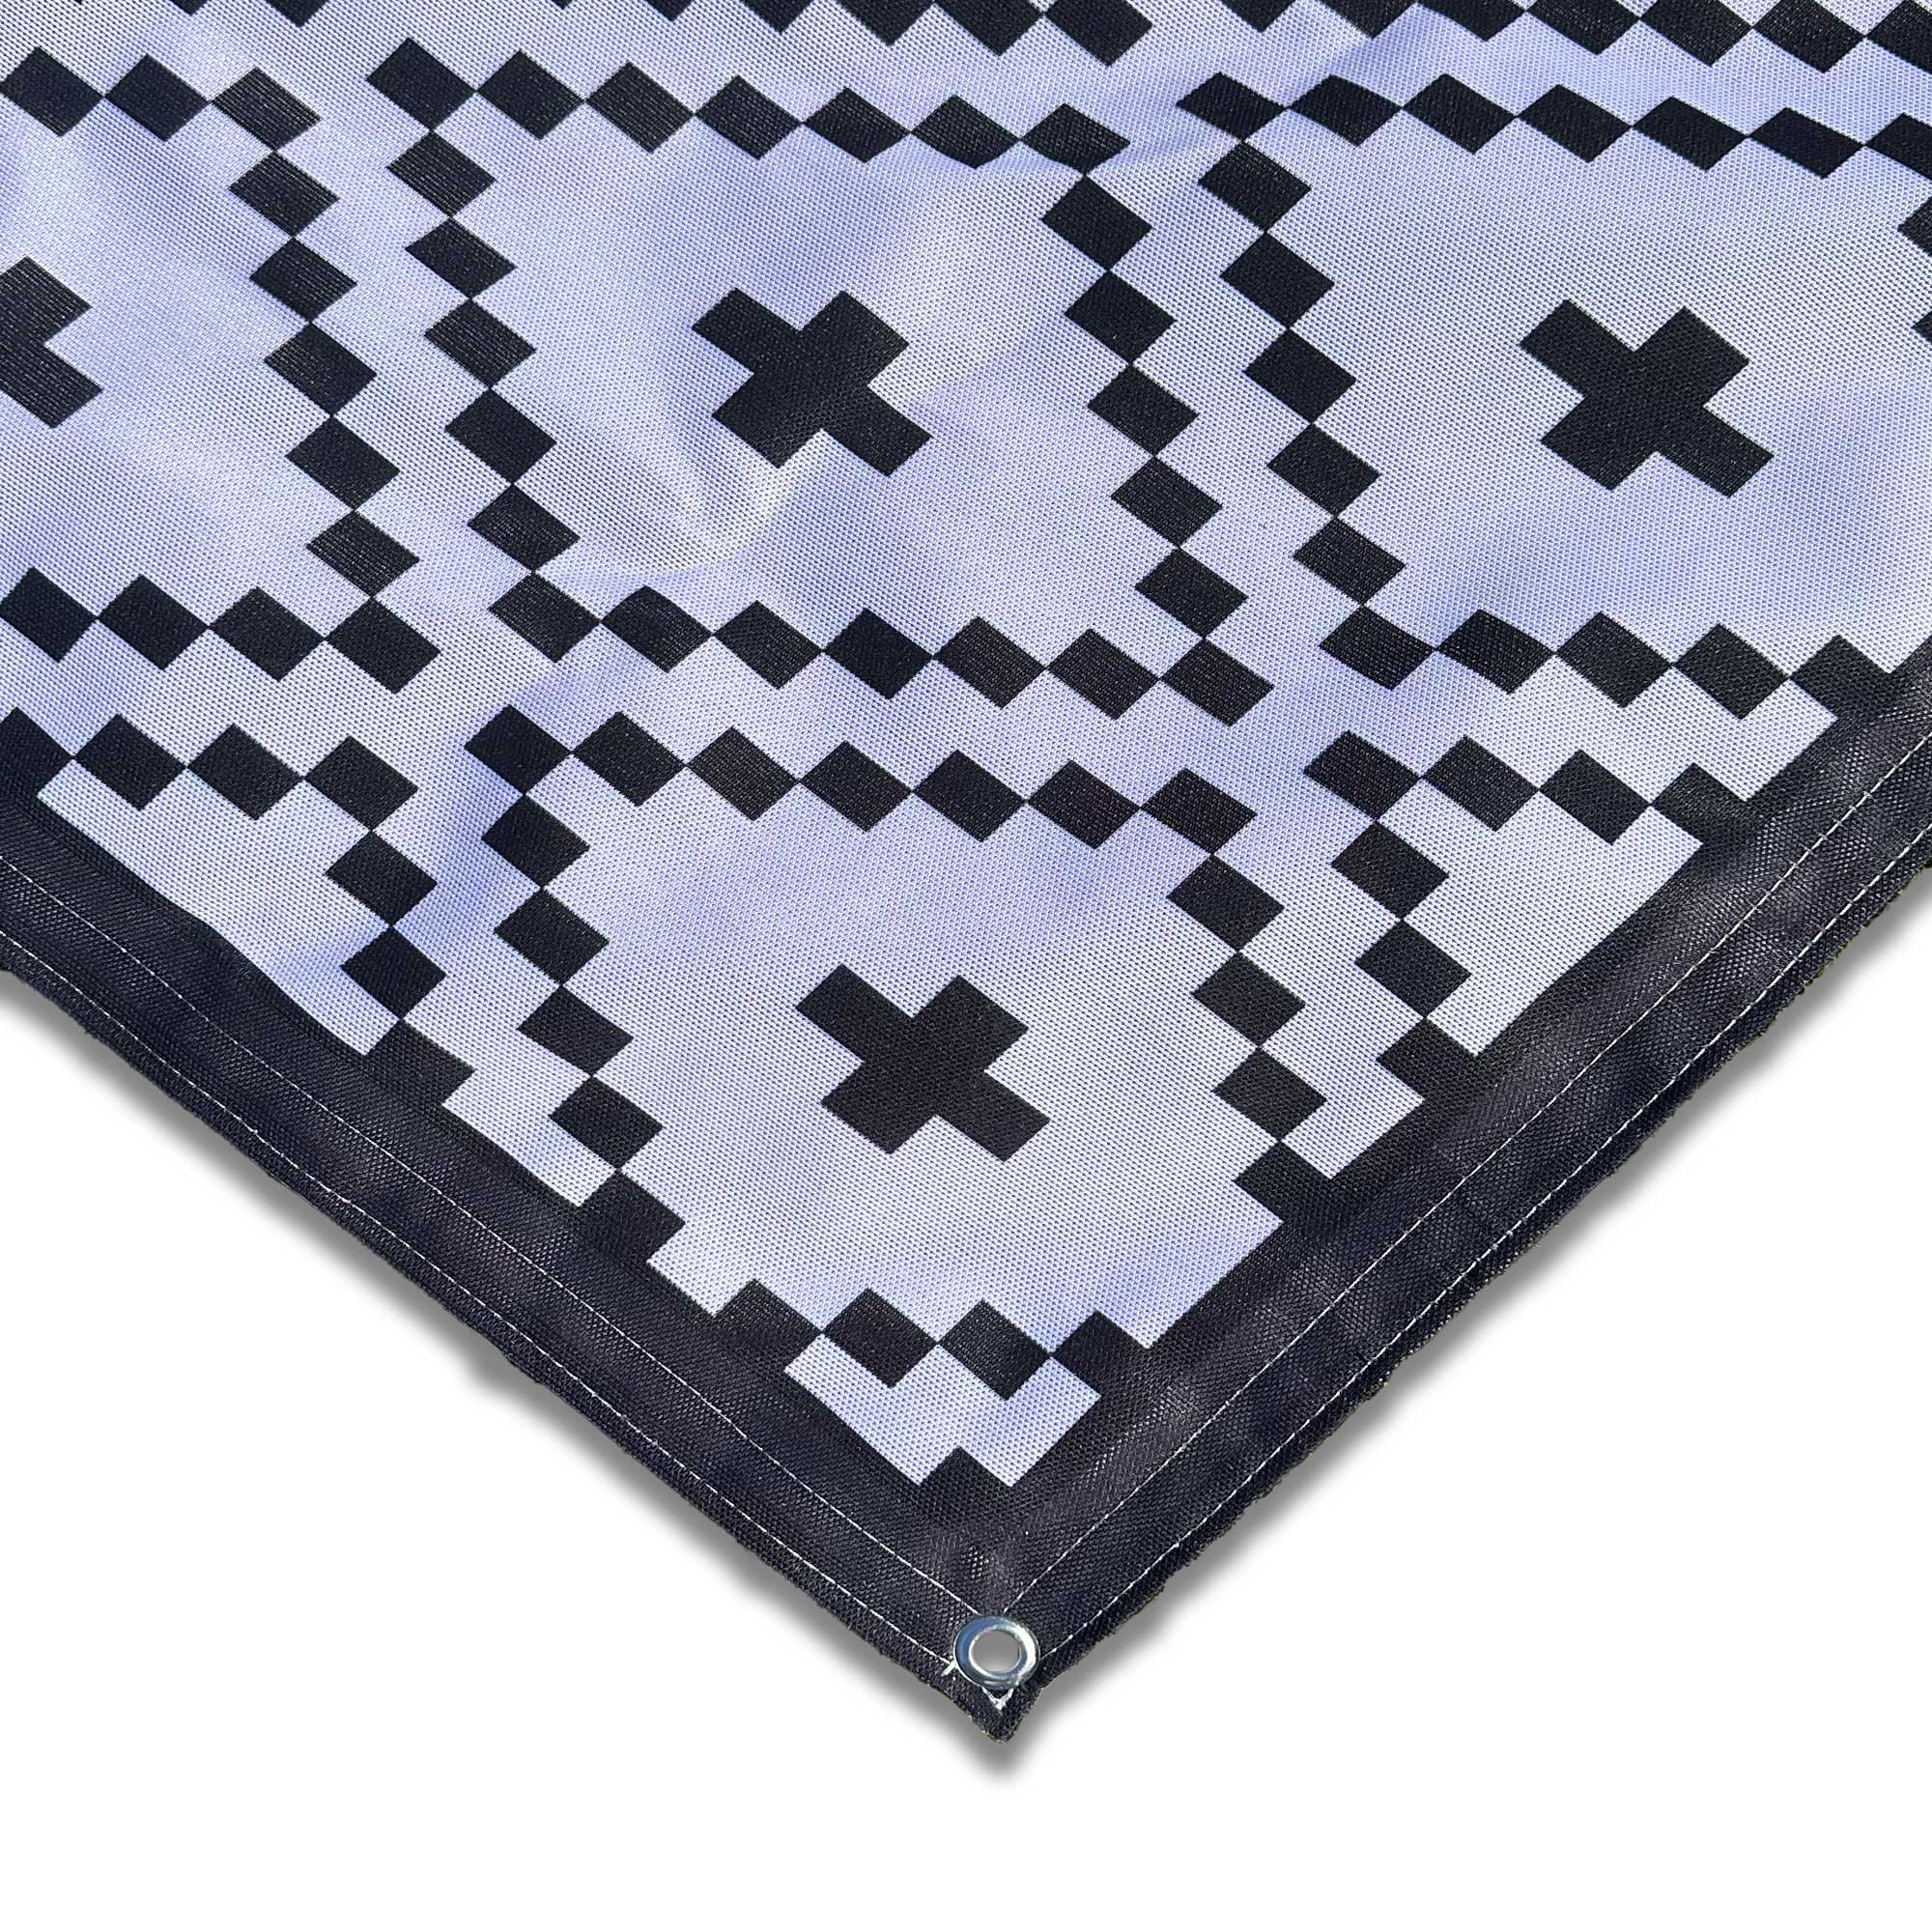 PREMIUM awning carpet with removable wind skirt - "Rhombus Black White"